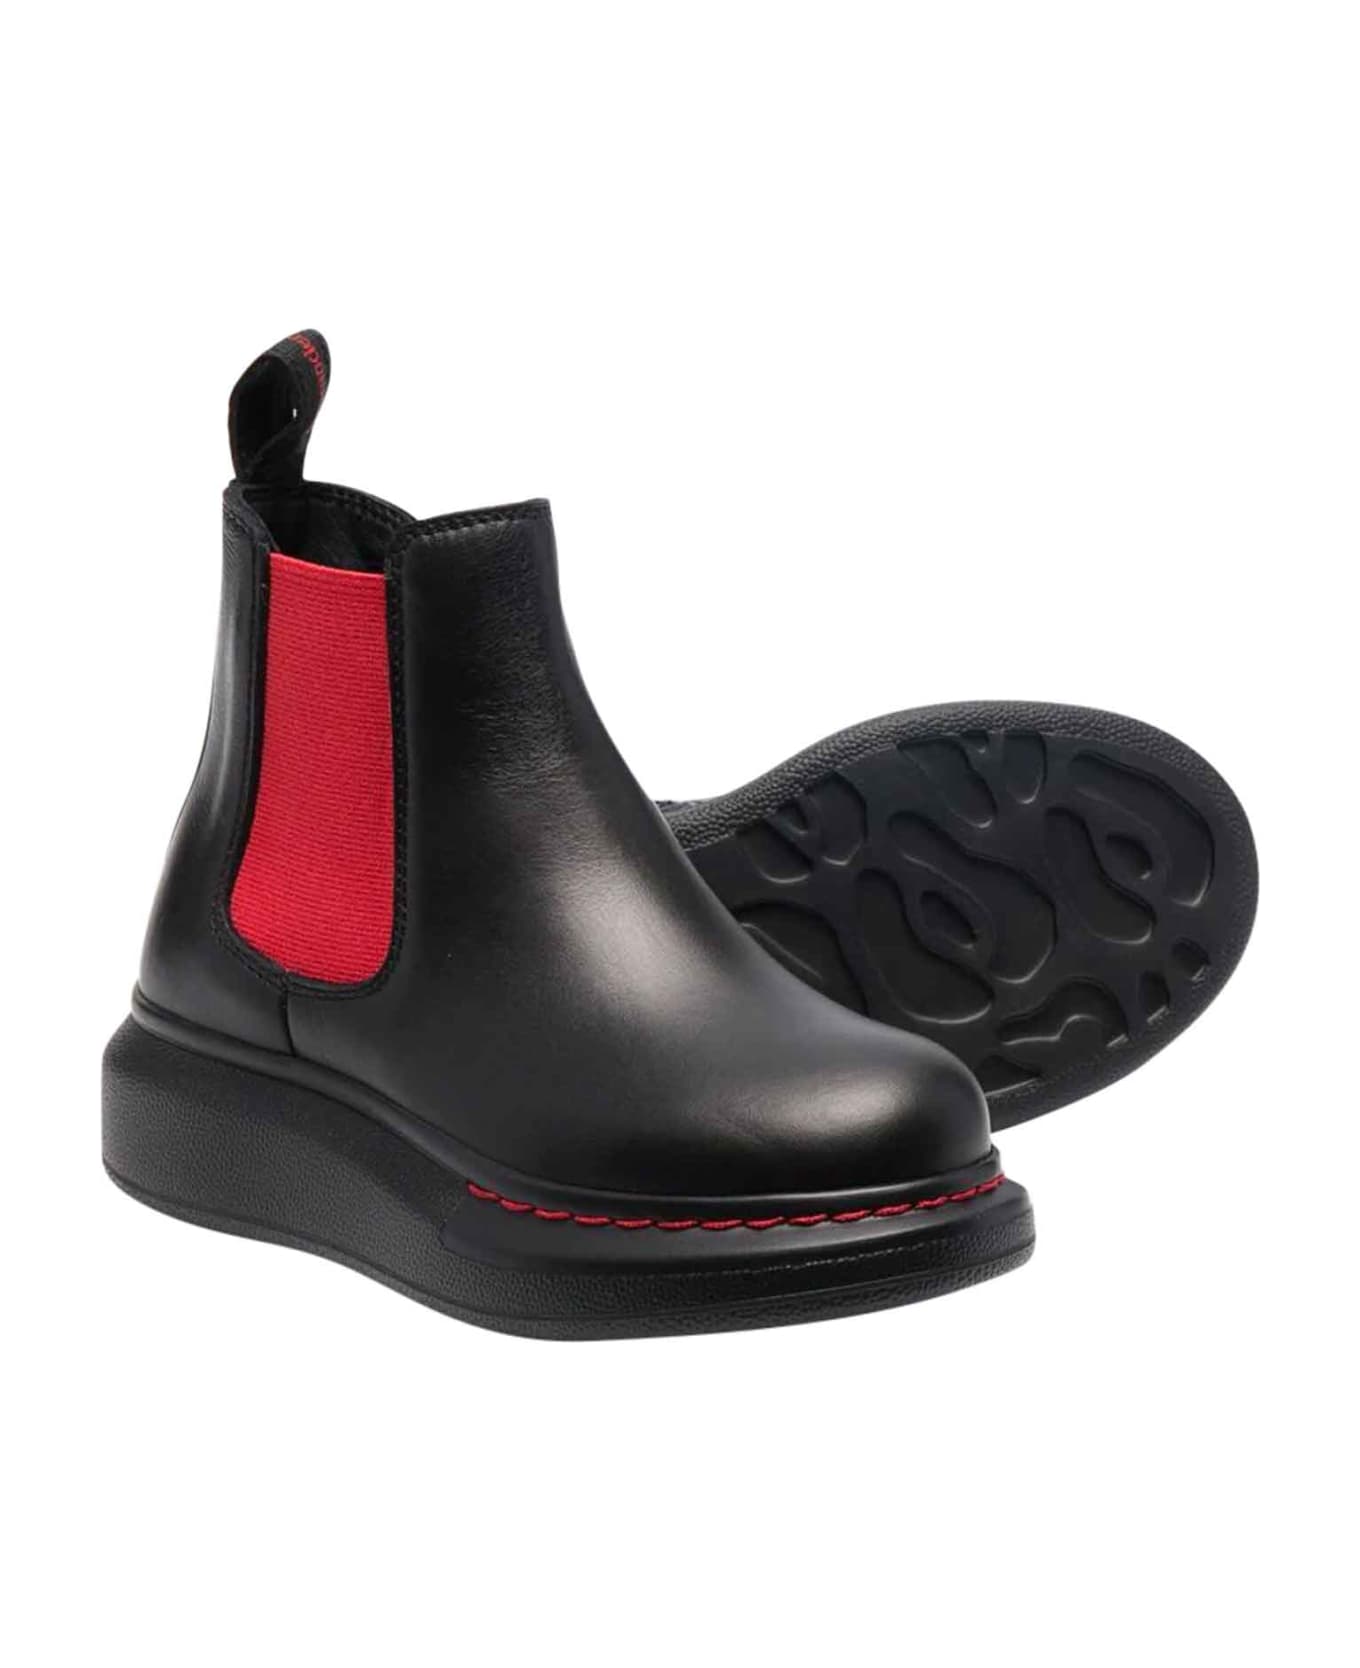 Alexander McQueen Kids Unisex Black Ankle Boots - Nero/rosso